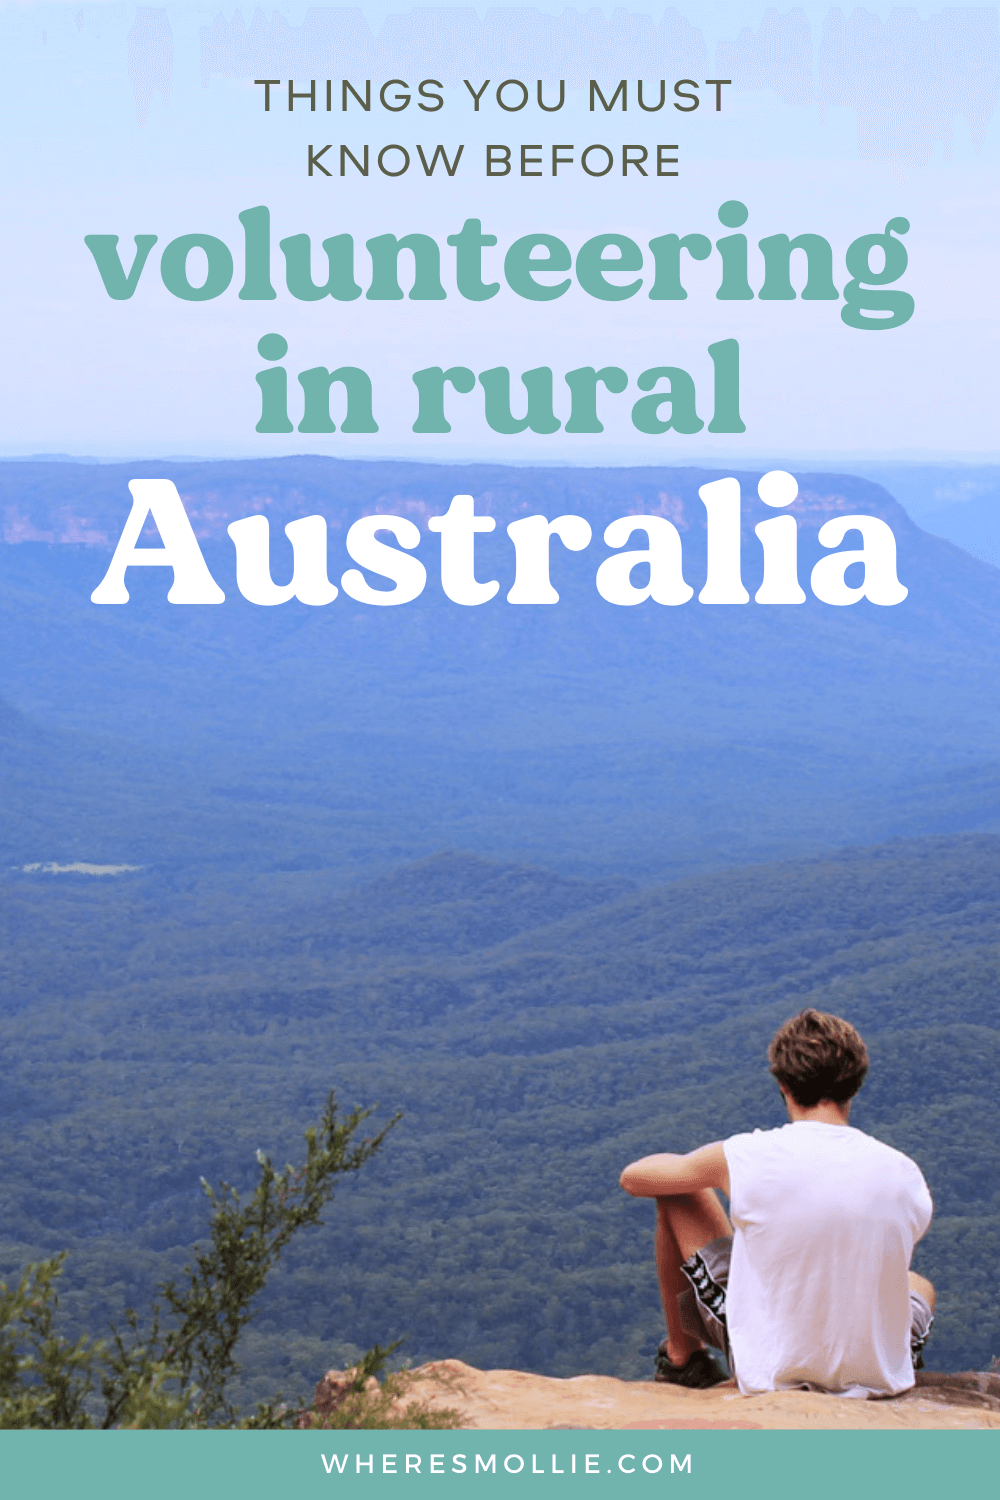 A guide to volunteering in rural Australia